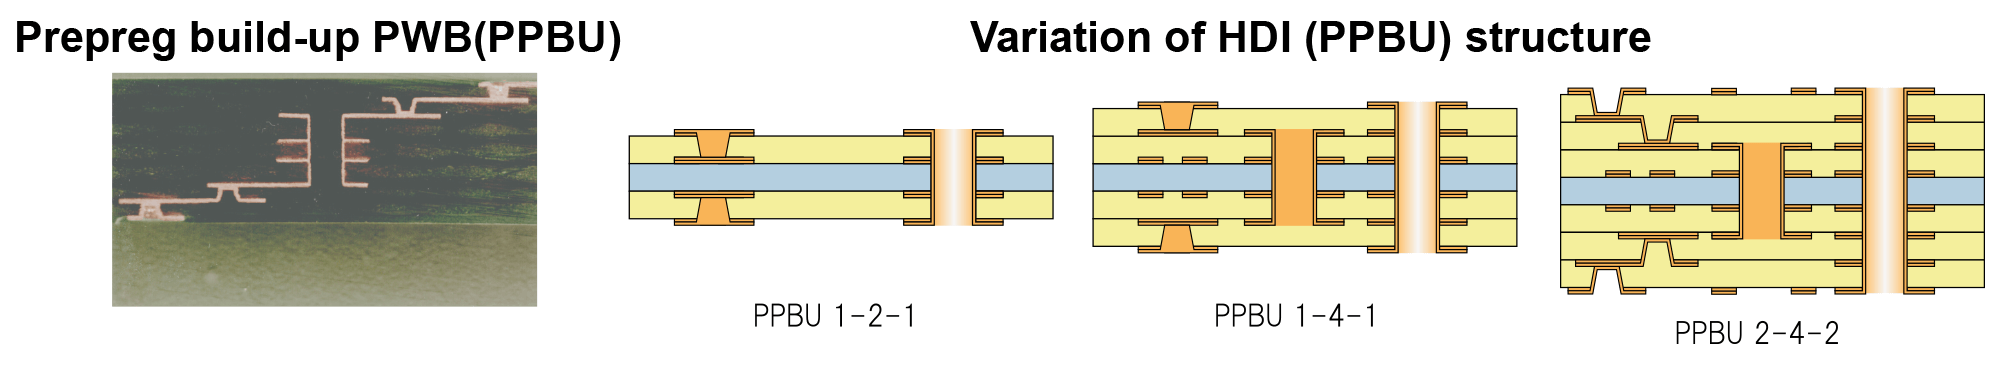 Prepreg build-up PWB(PPBU) Variation of HDI (PPBU) structure